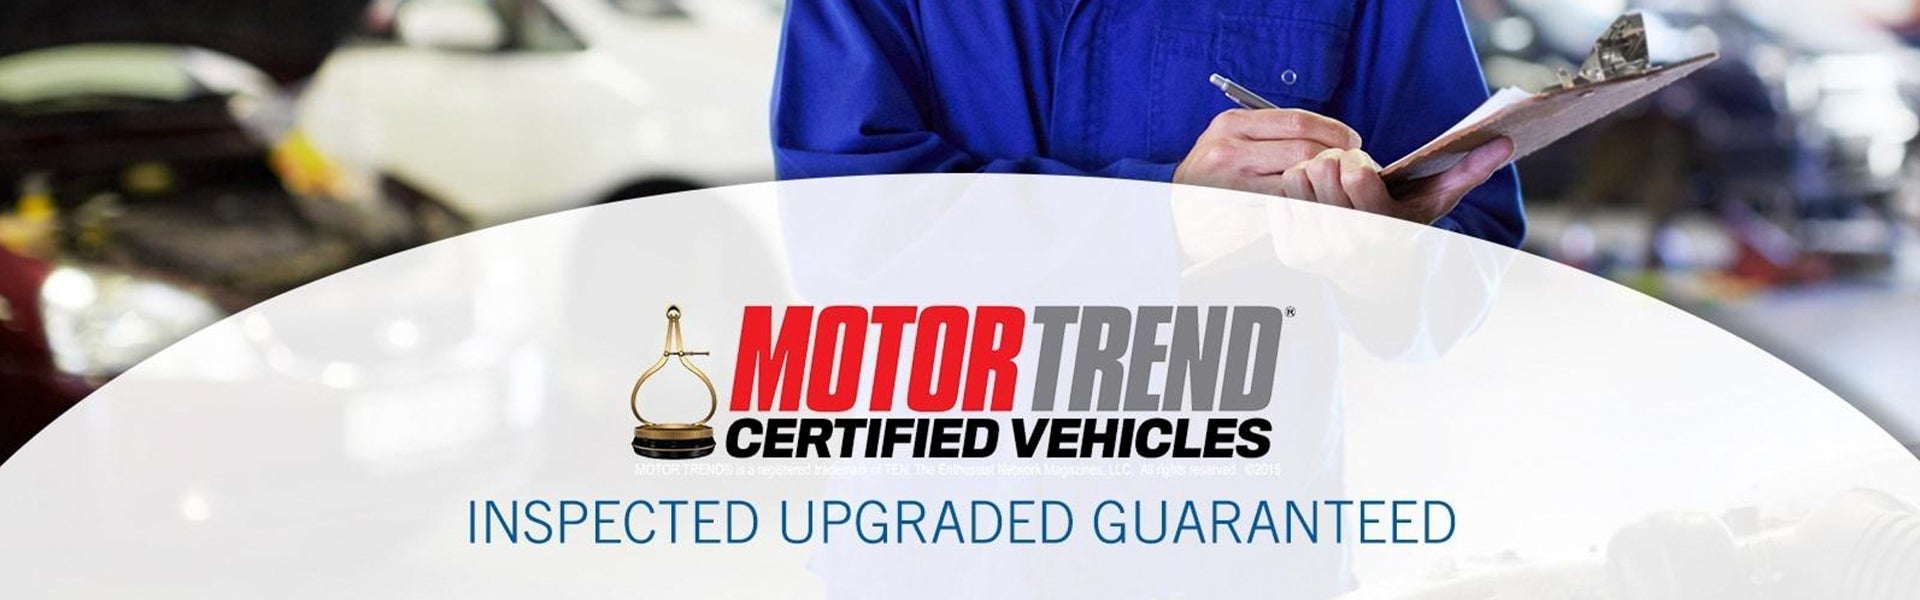 Motor Trend Banner (Certified vehicles)